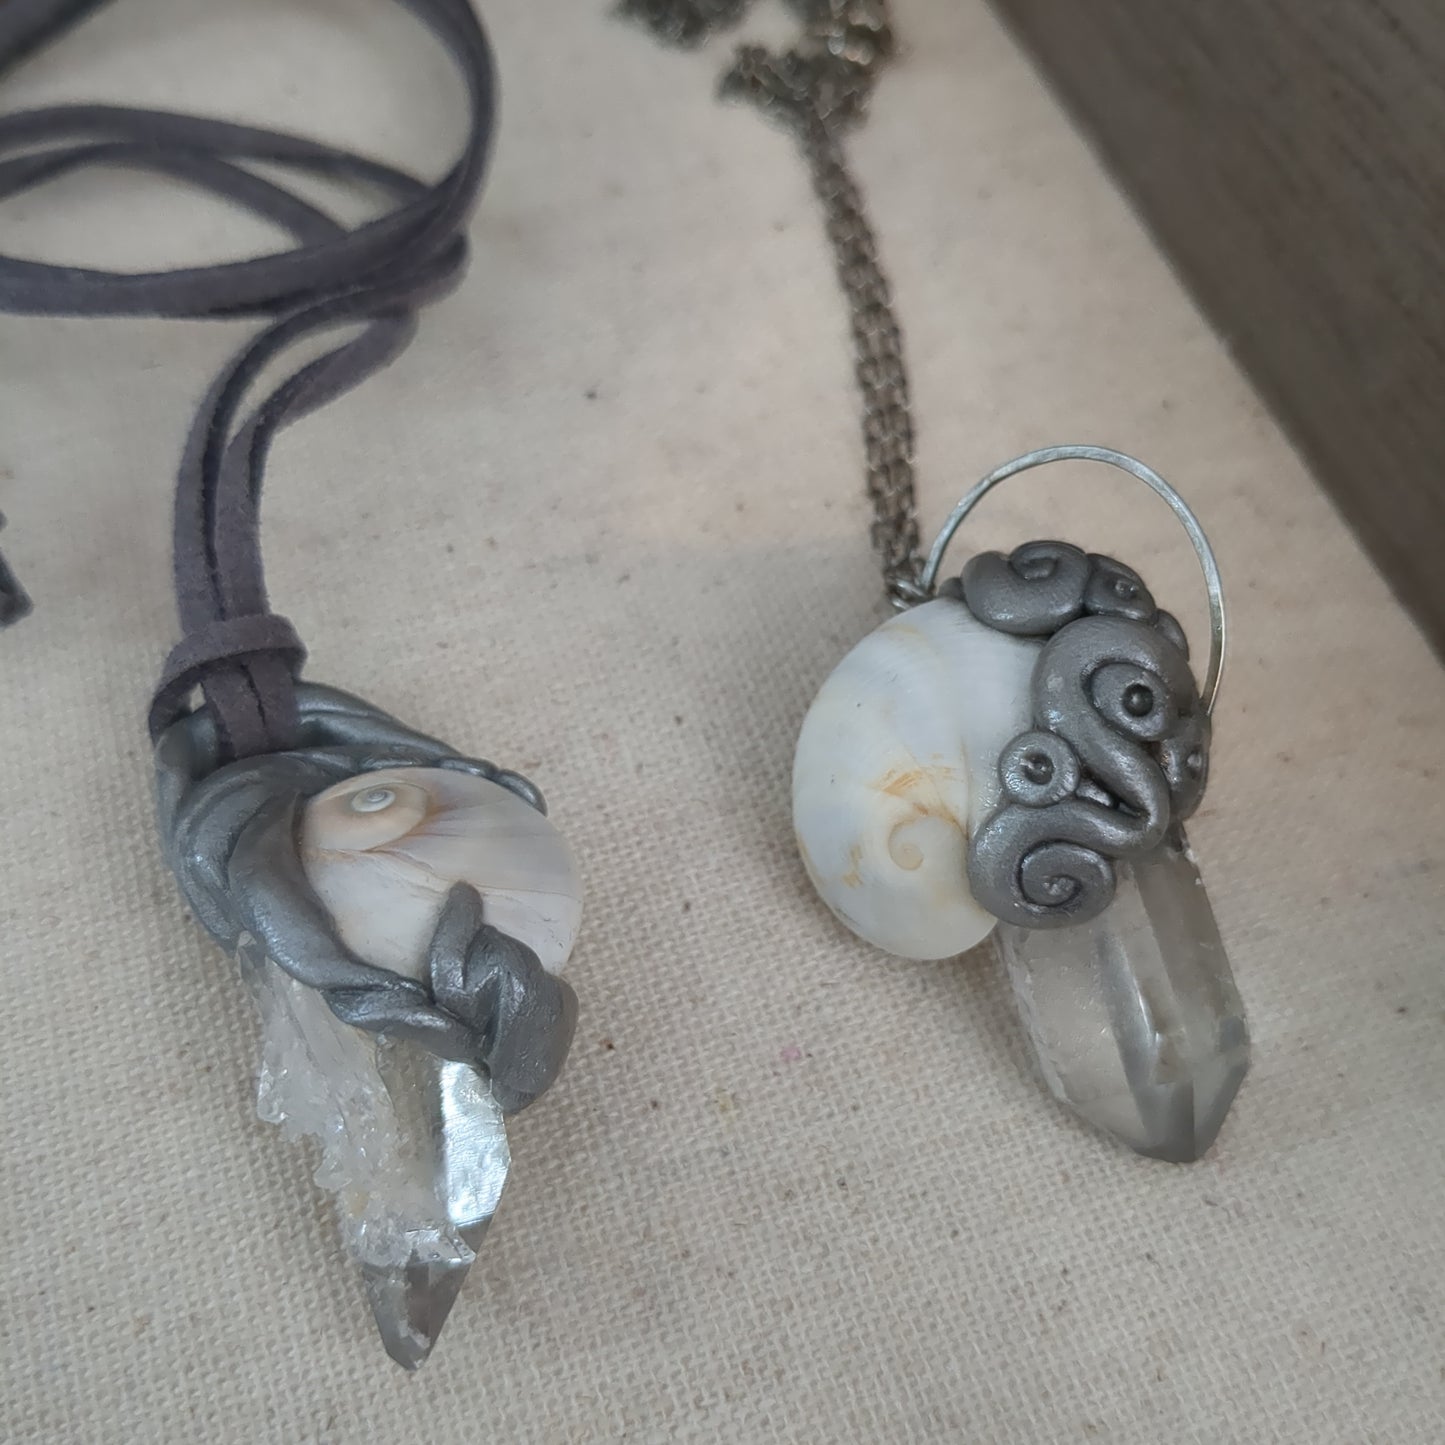 Snail shell and clear quartz sculptural pendant